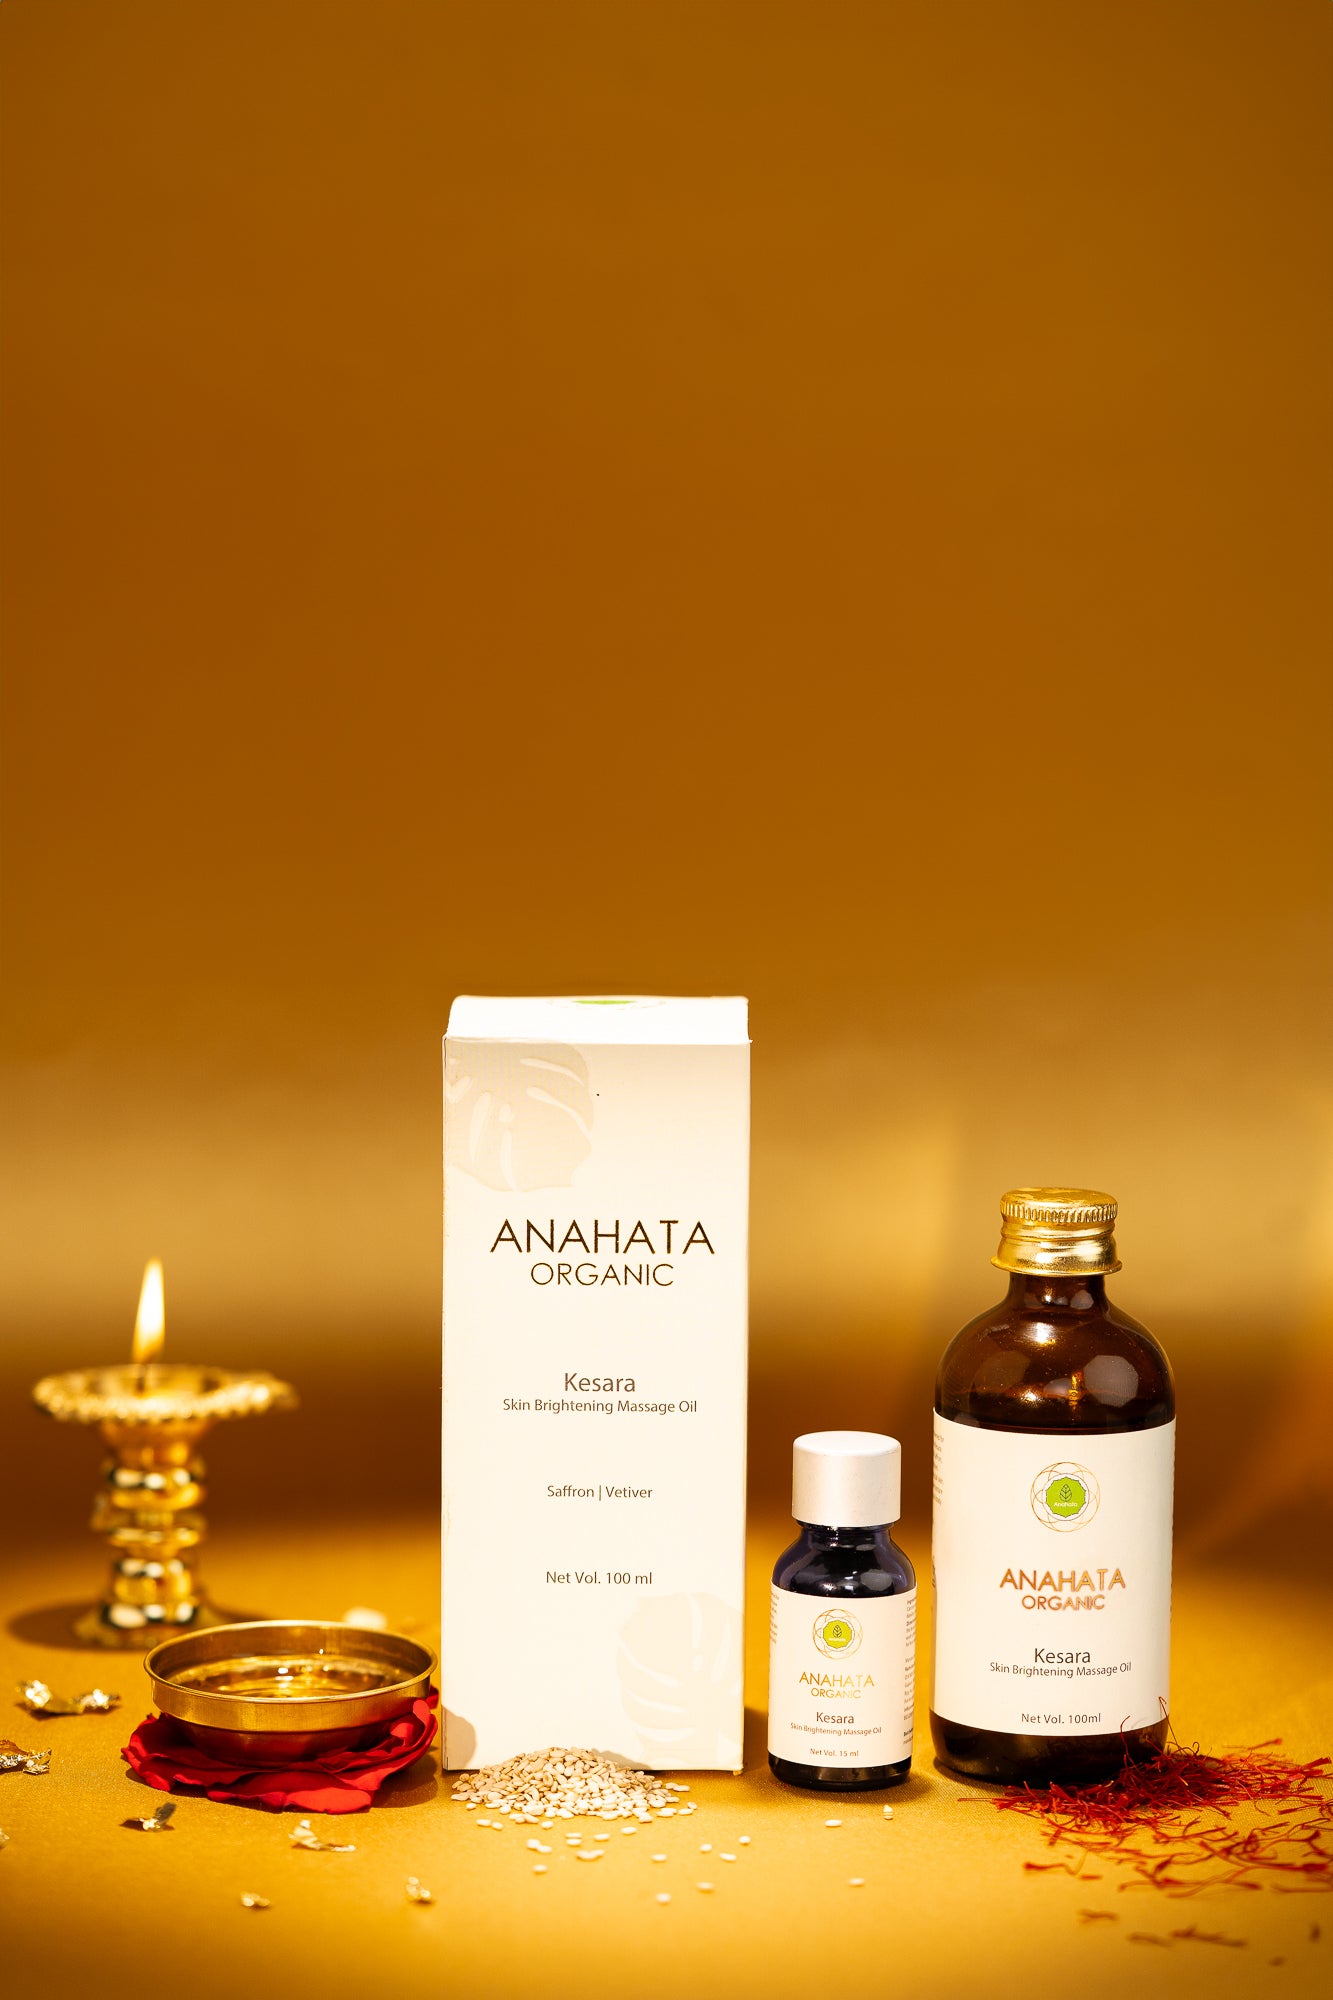 KESARA Skin Brightening Massage Oil - Anahata Organic